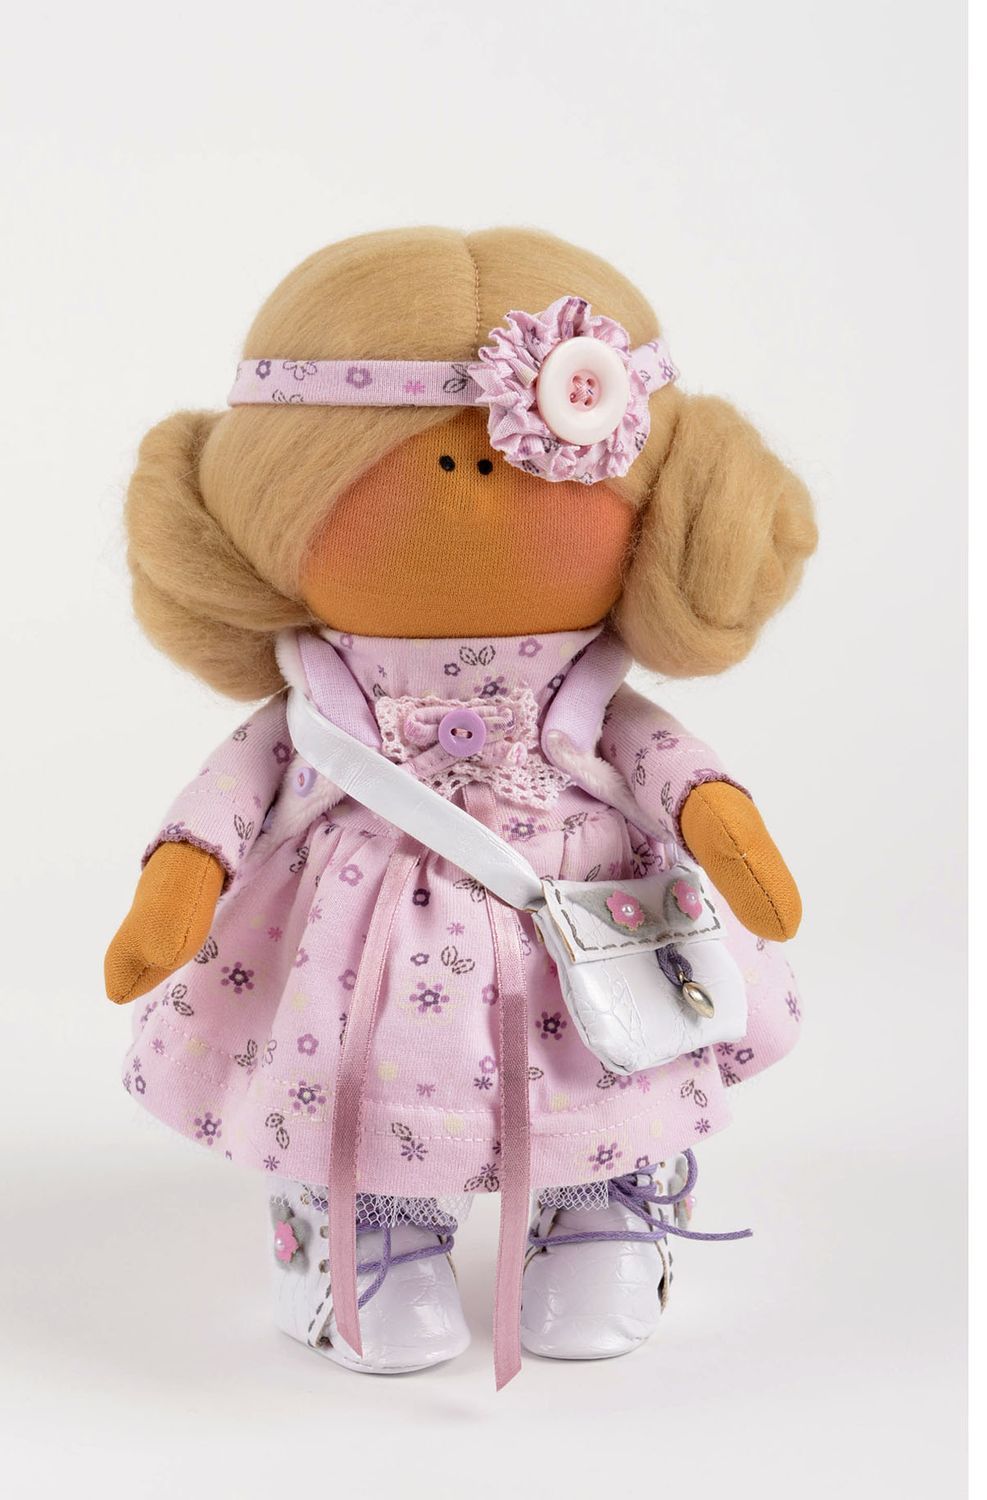 Handmade soft doll girl doll stuffed toys home decor best gifts for girls photo 1